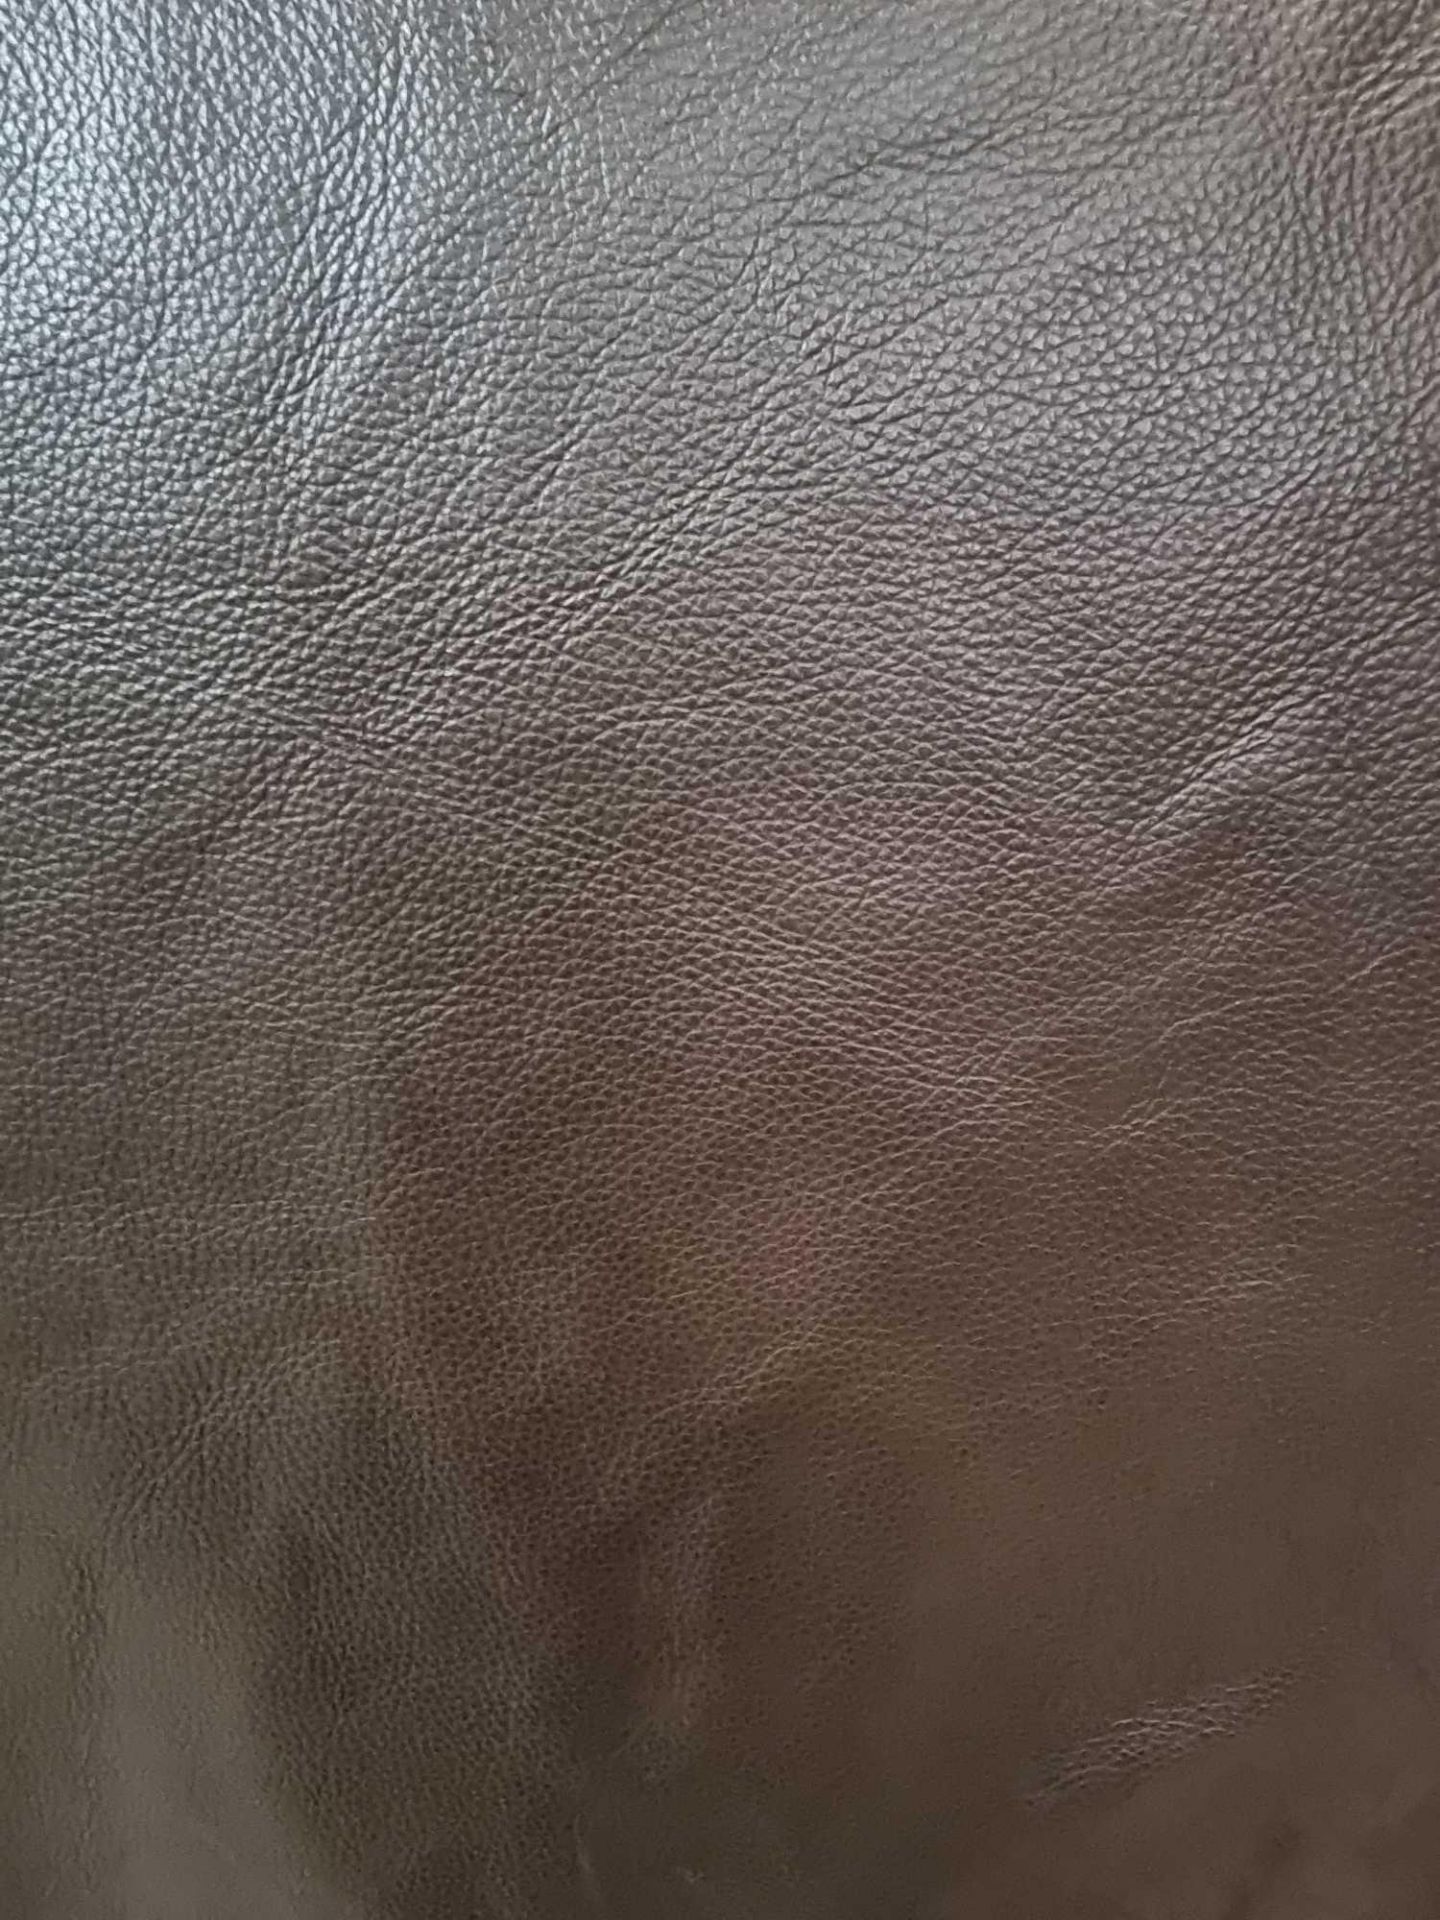 Mastrotto Dakota Chocolate Leather Hide approximately 5.46mÂ² 2.6 x 2.1cm - Image 2 of 2